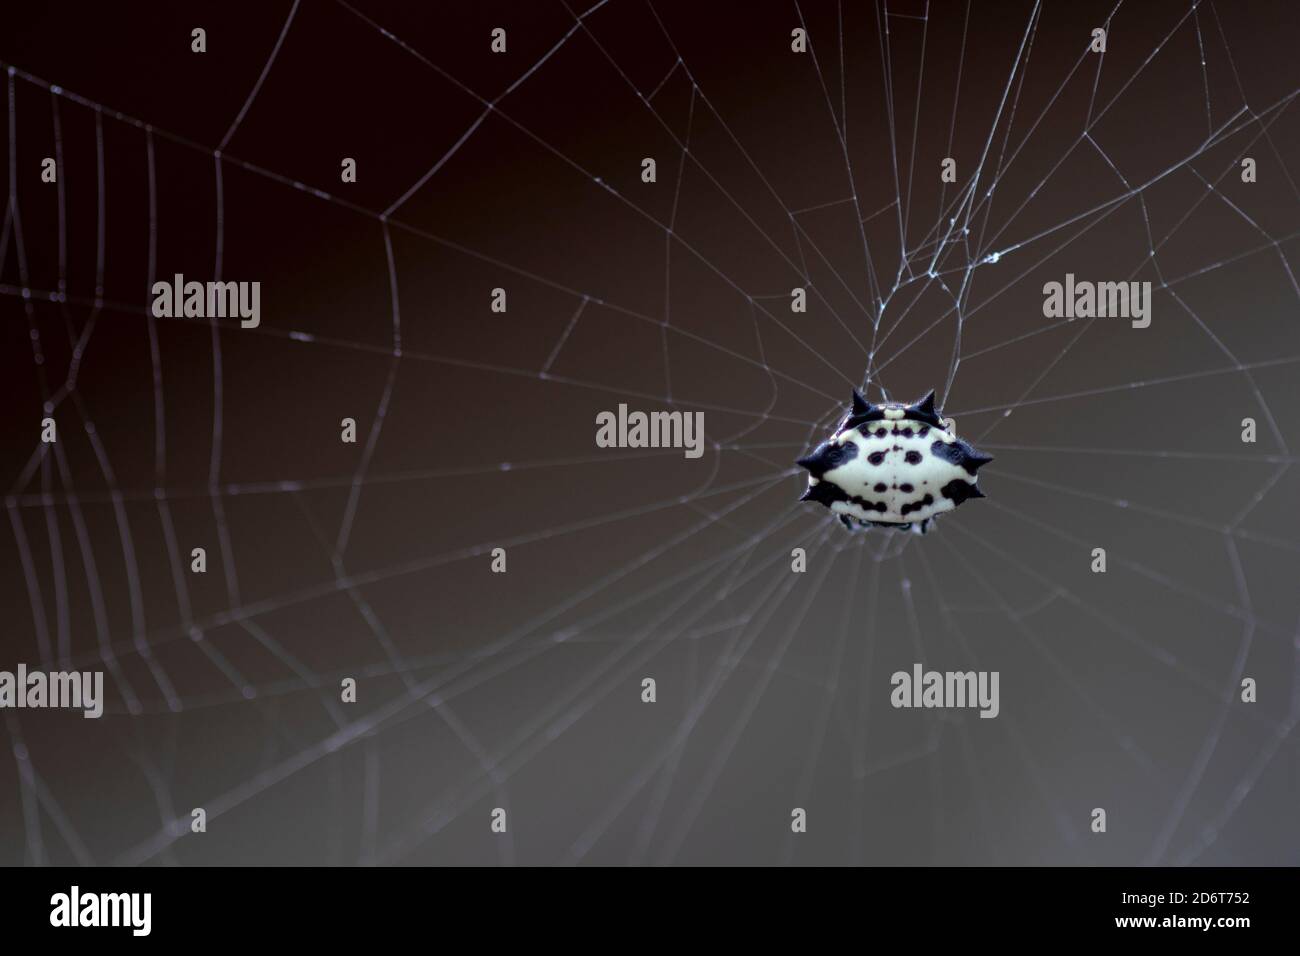 Stachelspinne Orbweaver Spinne im Netz ausgesetzt Stockfoto